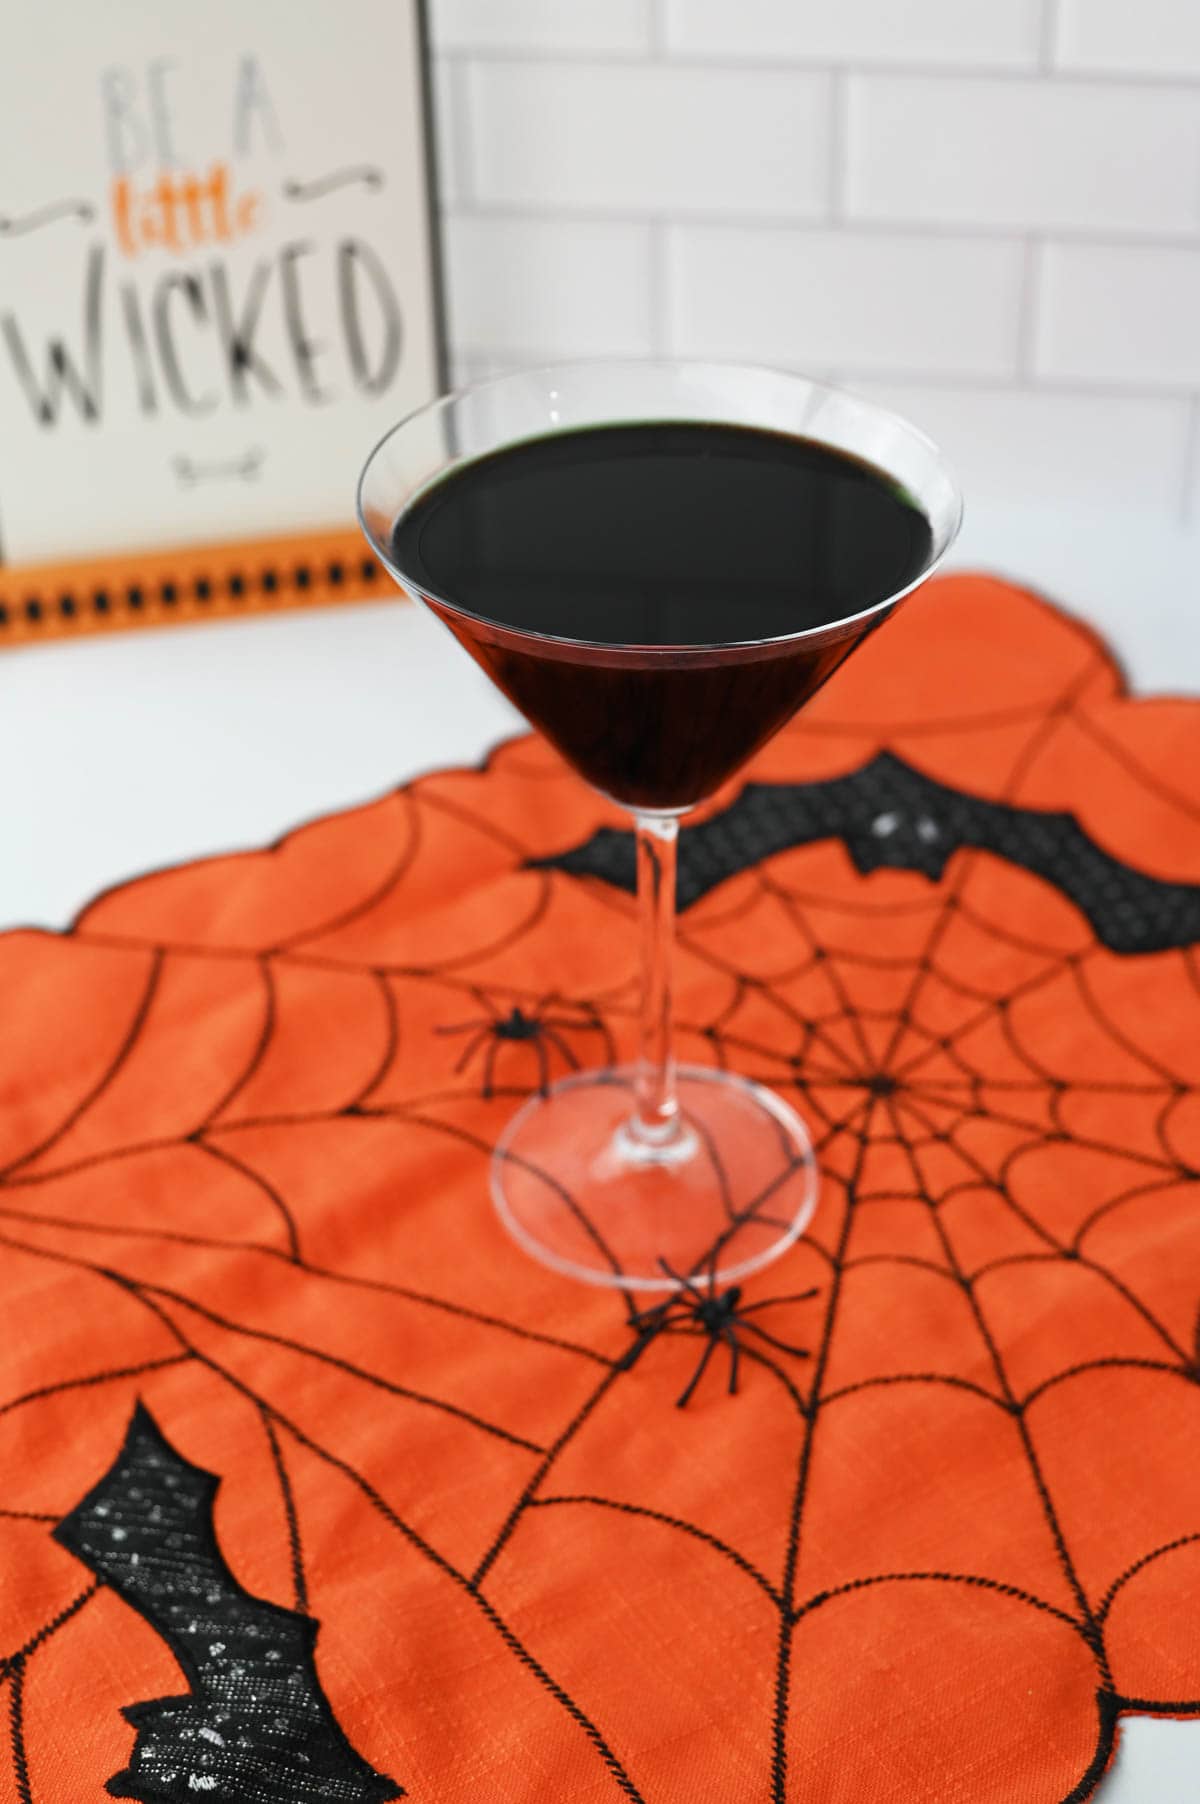 Black martini on orange spiderweb decor